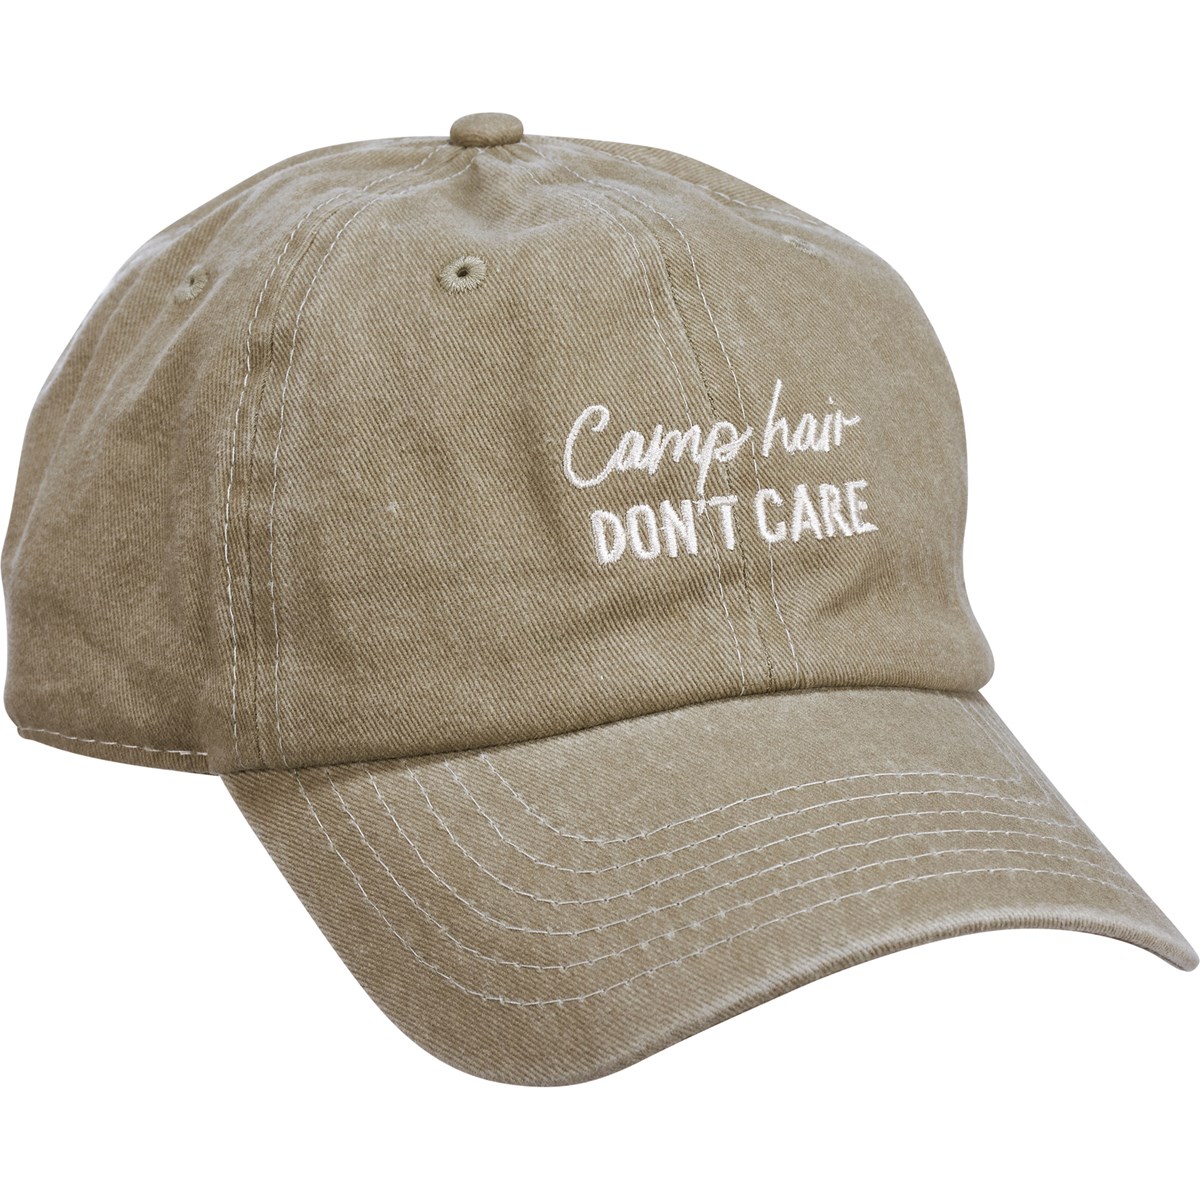 Camp Hair Don't Care Baseball Cap - Cotton, Metal